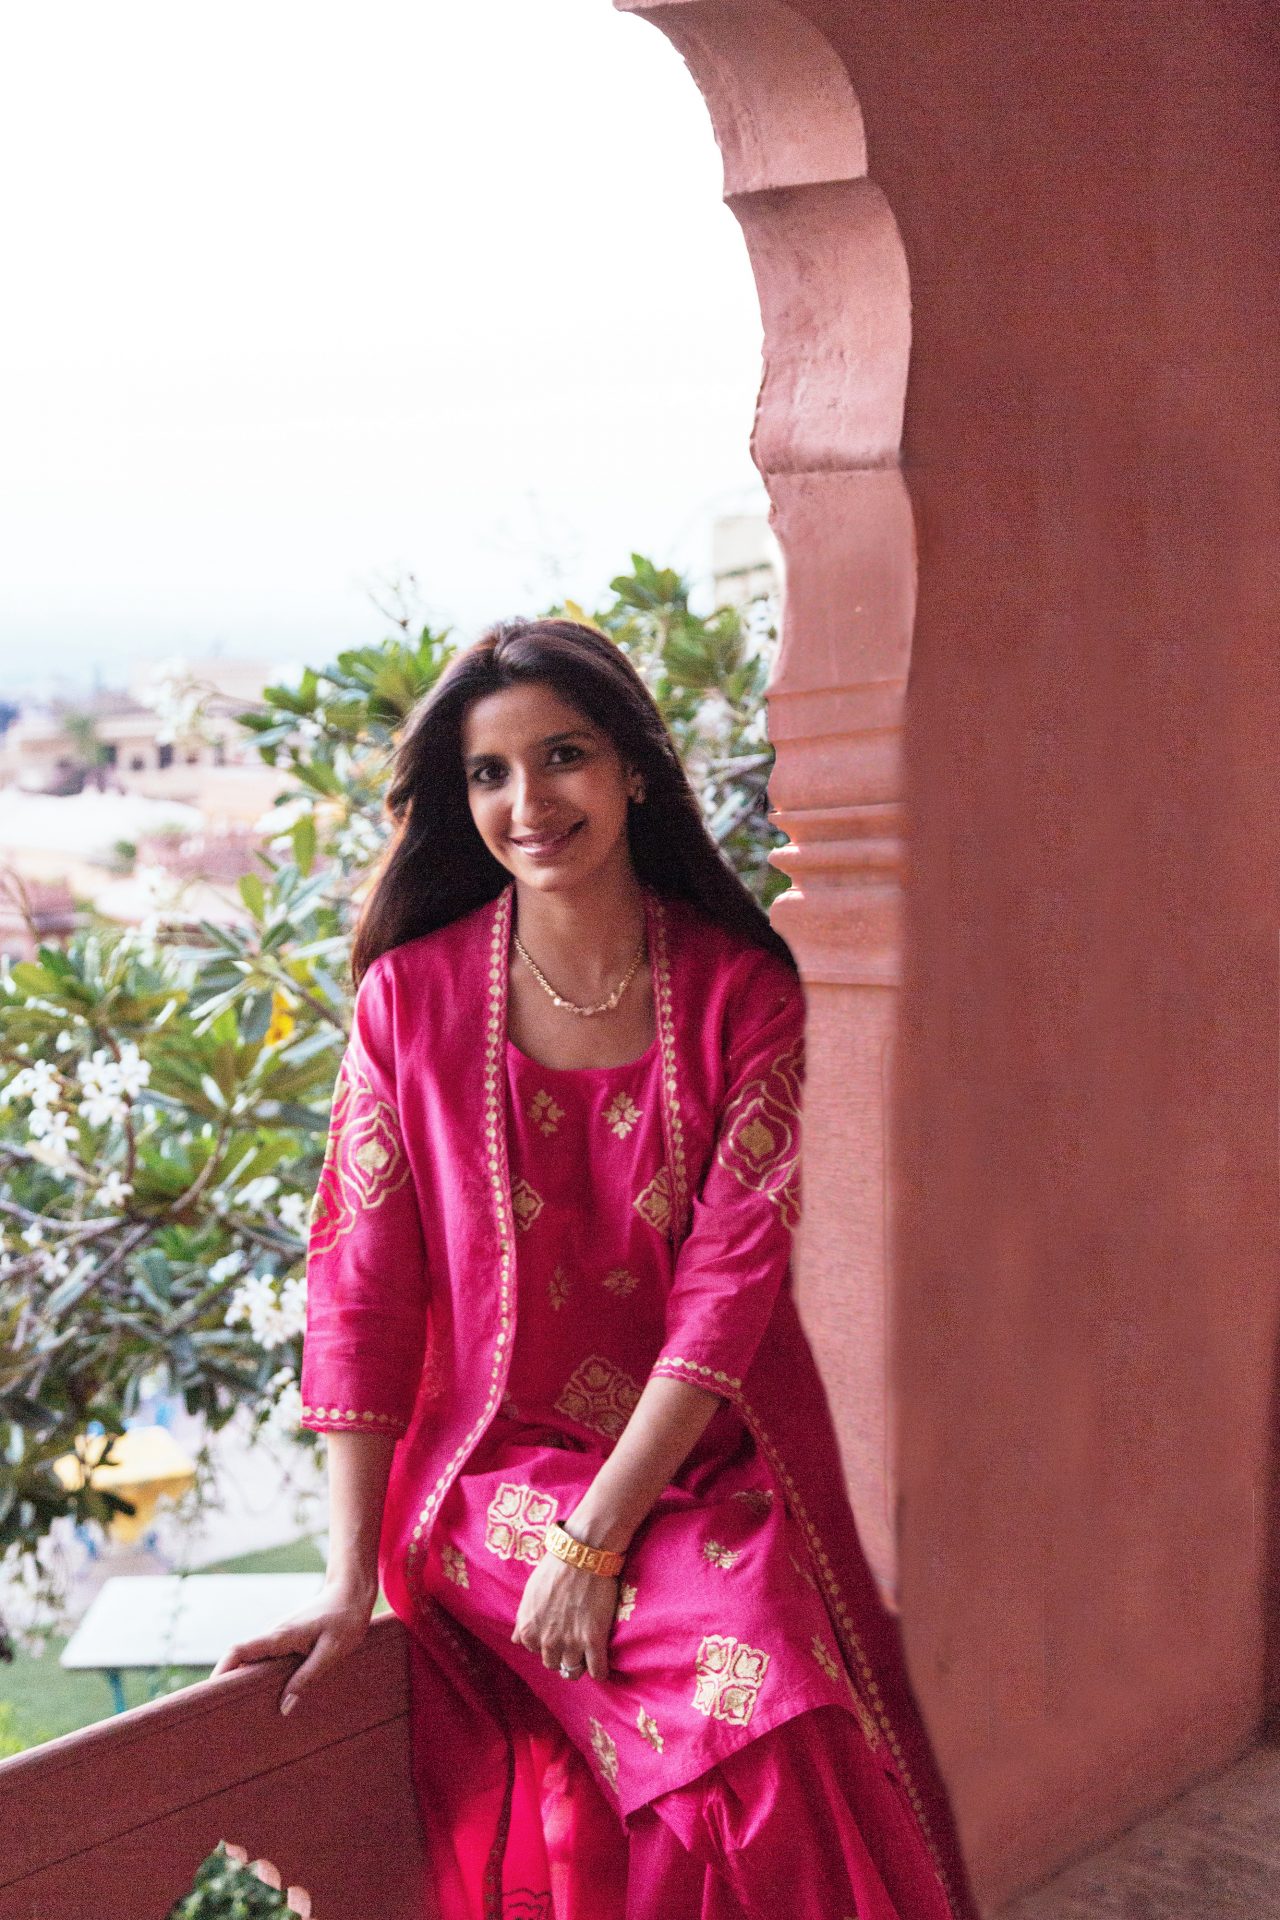 Women in Luxury: In Conversation with Sonavi Kaicker, CEO of Neemrana Hotels